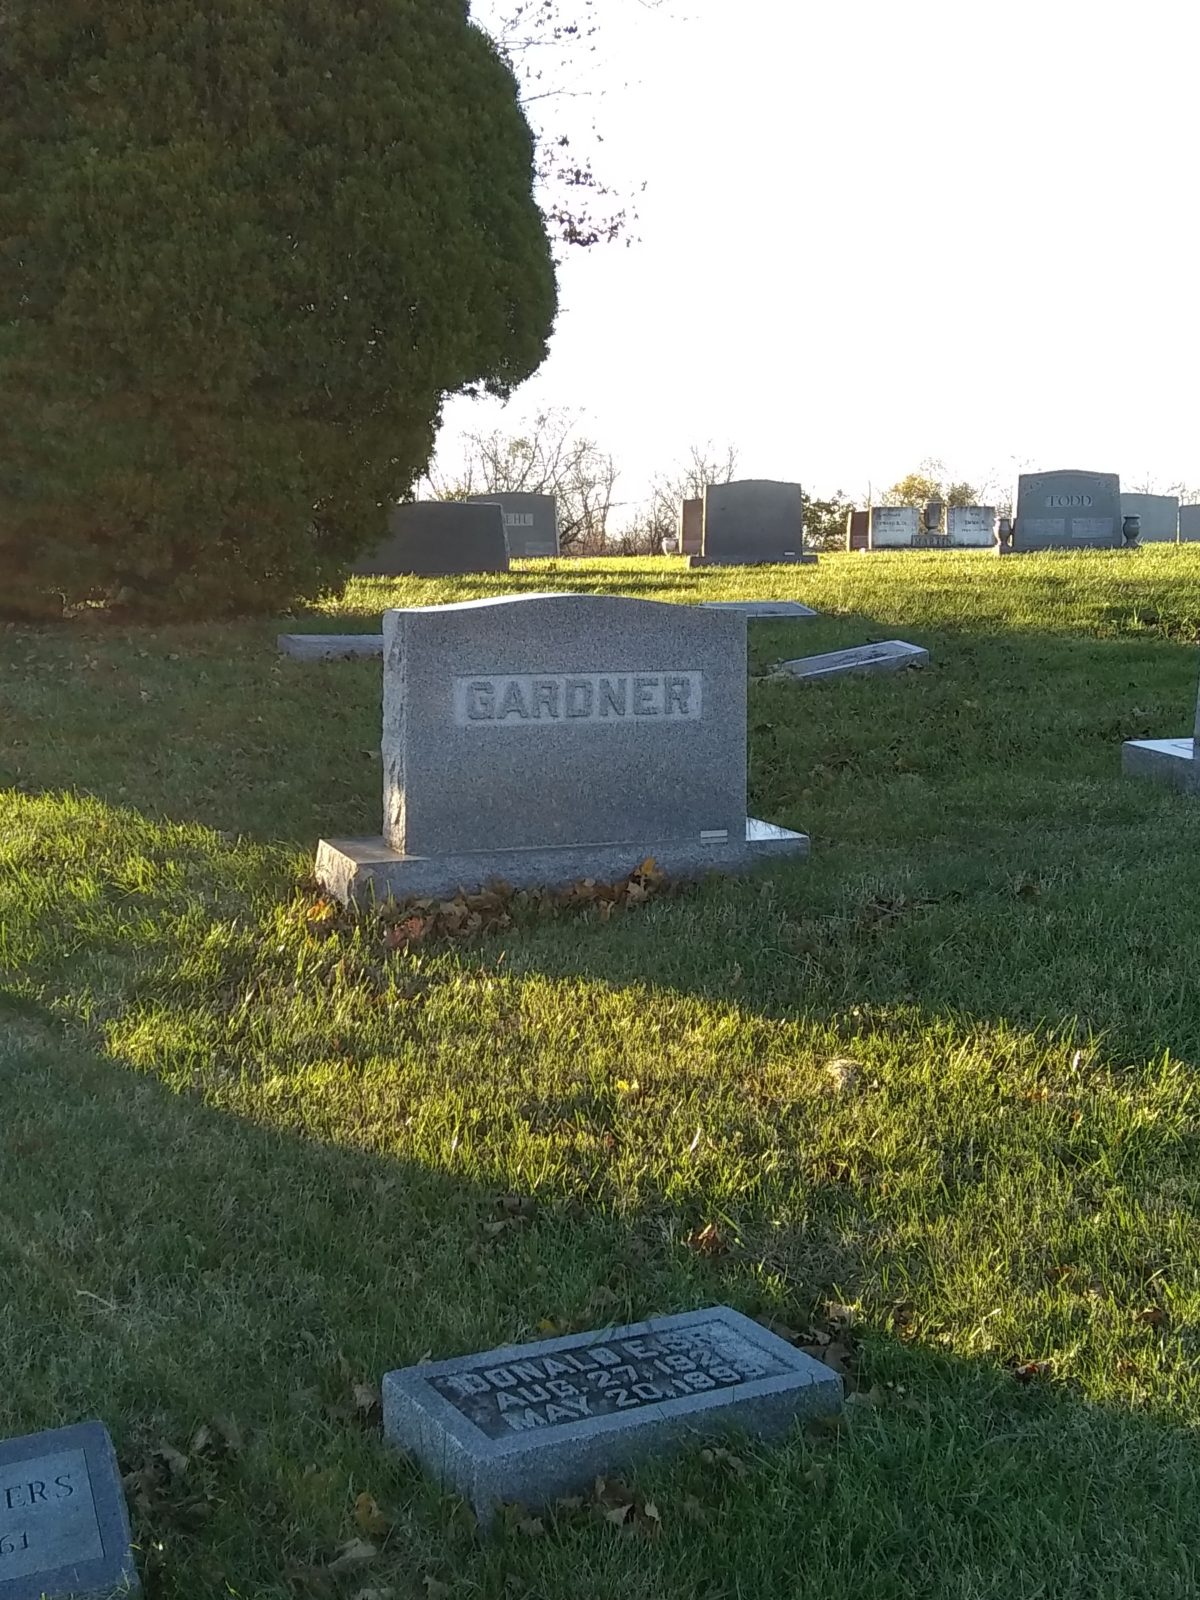 My grandparents' grave